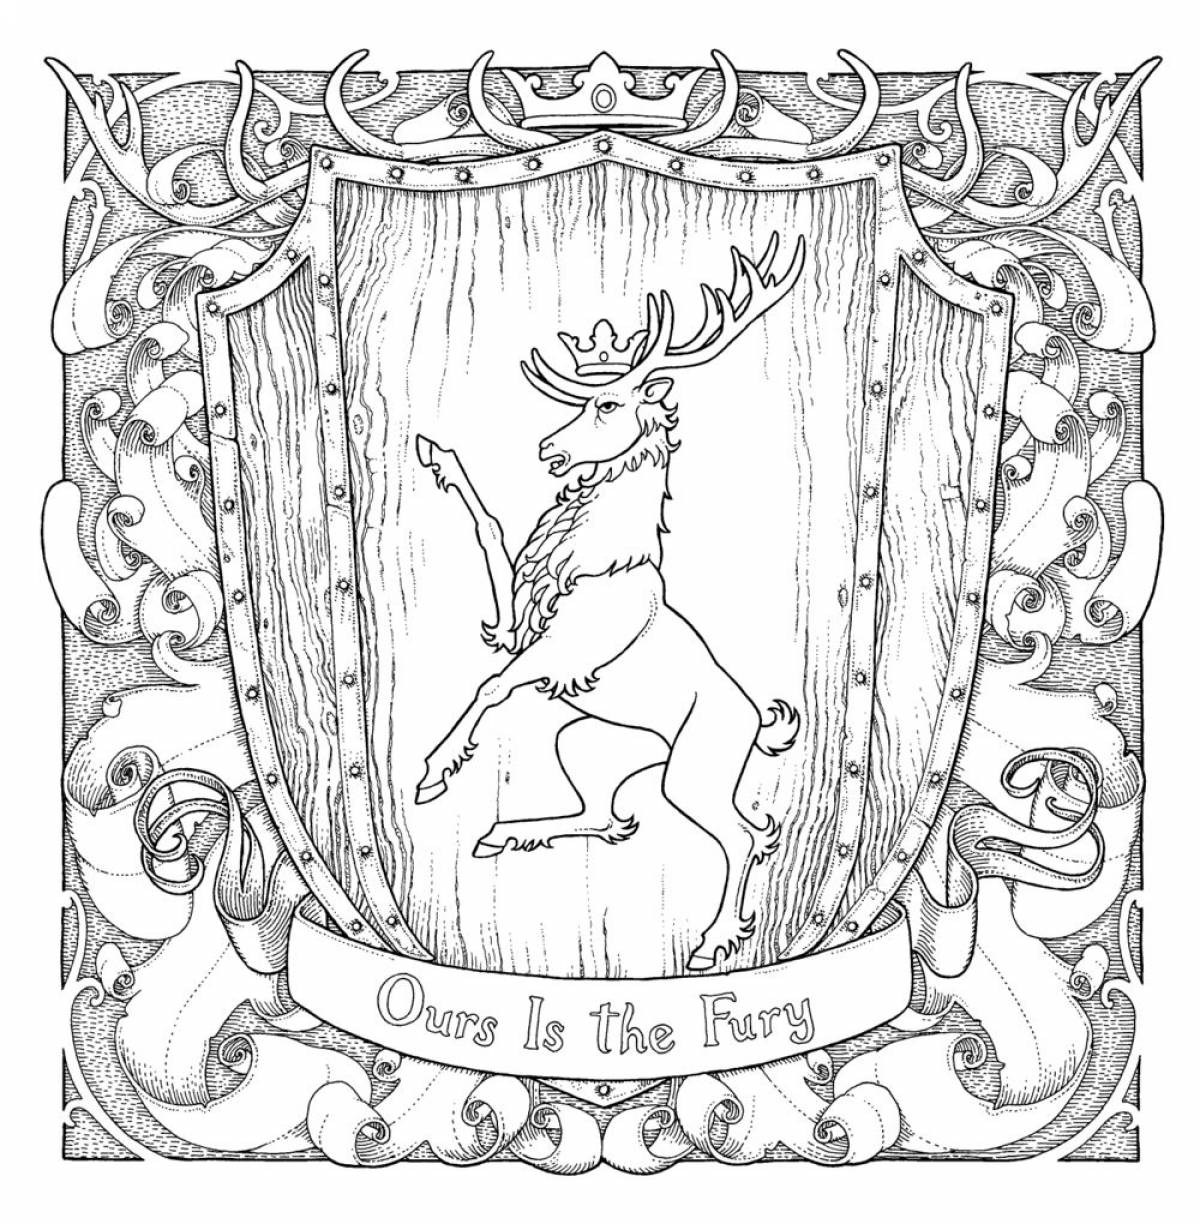 Joffrey Baratheon's personal coat of arms